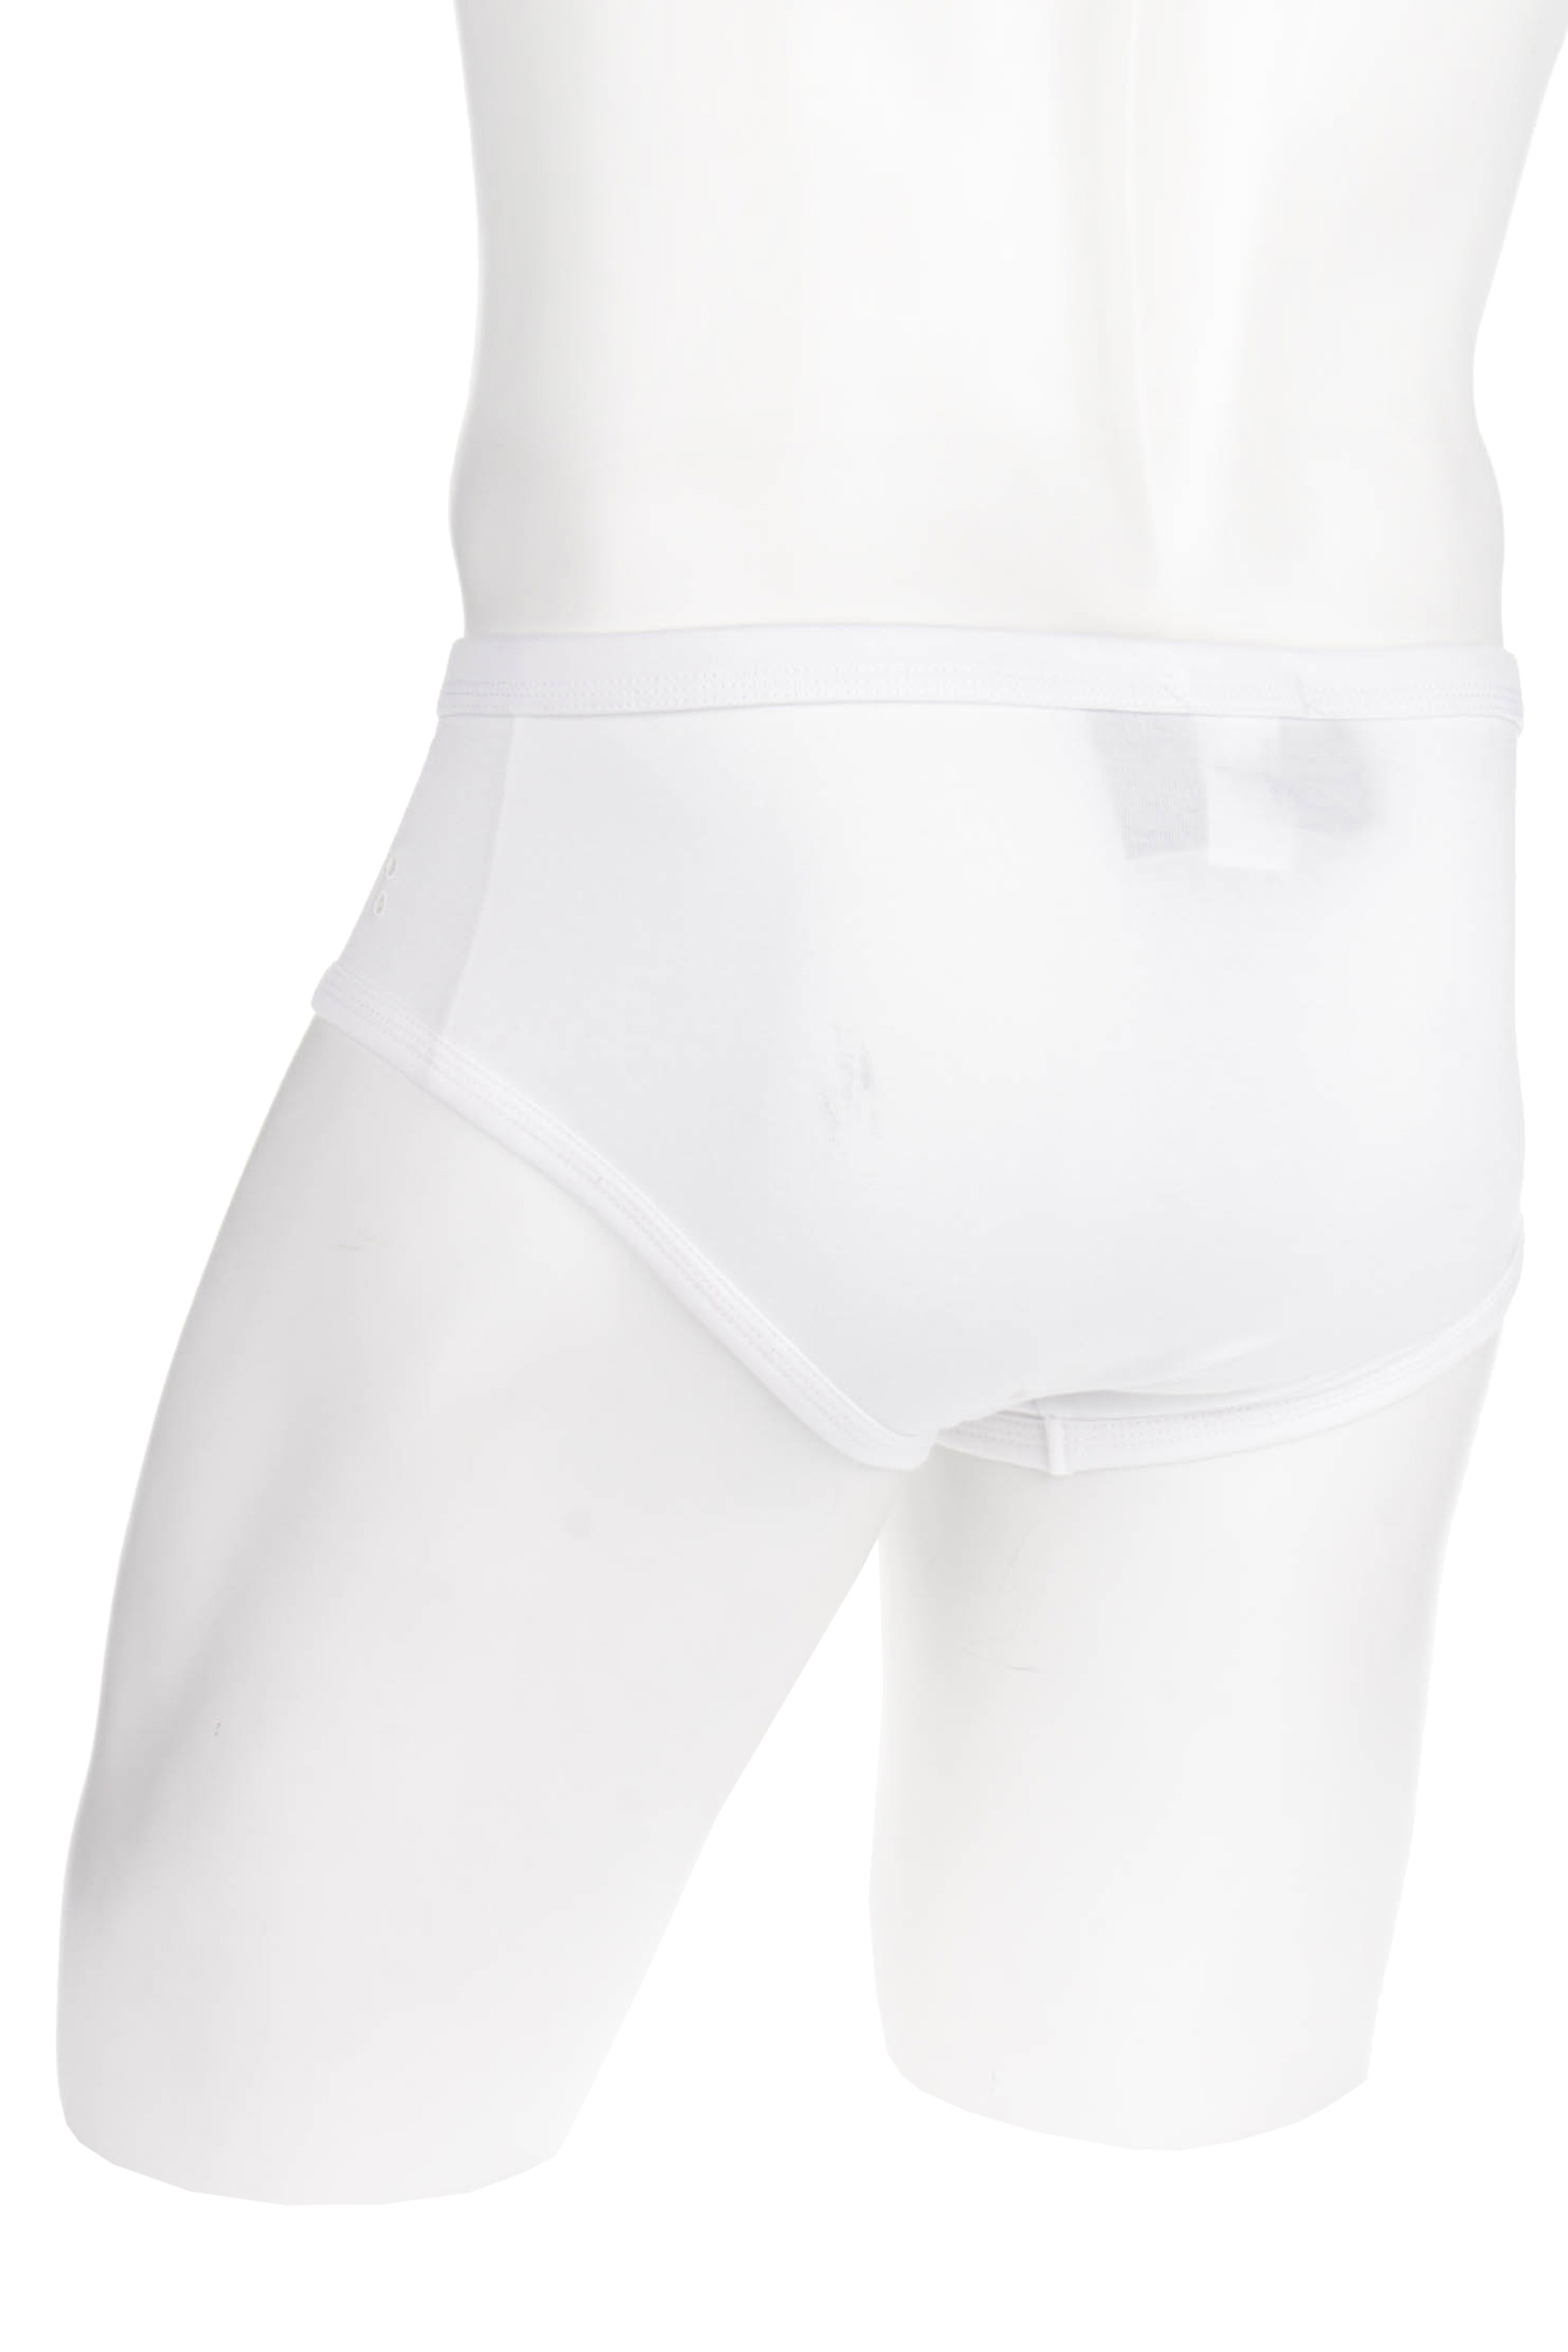 RON DORFF Y-Front Brief | Underwear | Clothing | Men | mientus Online Store